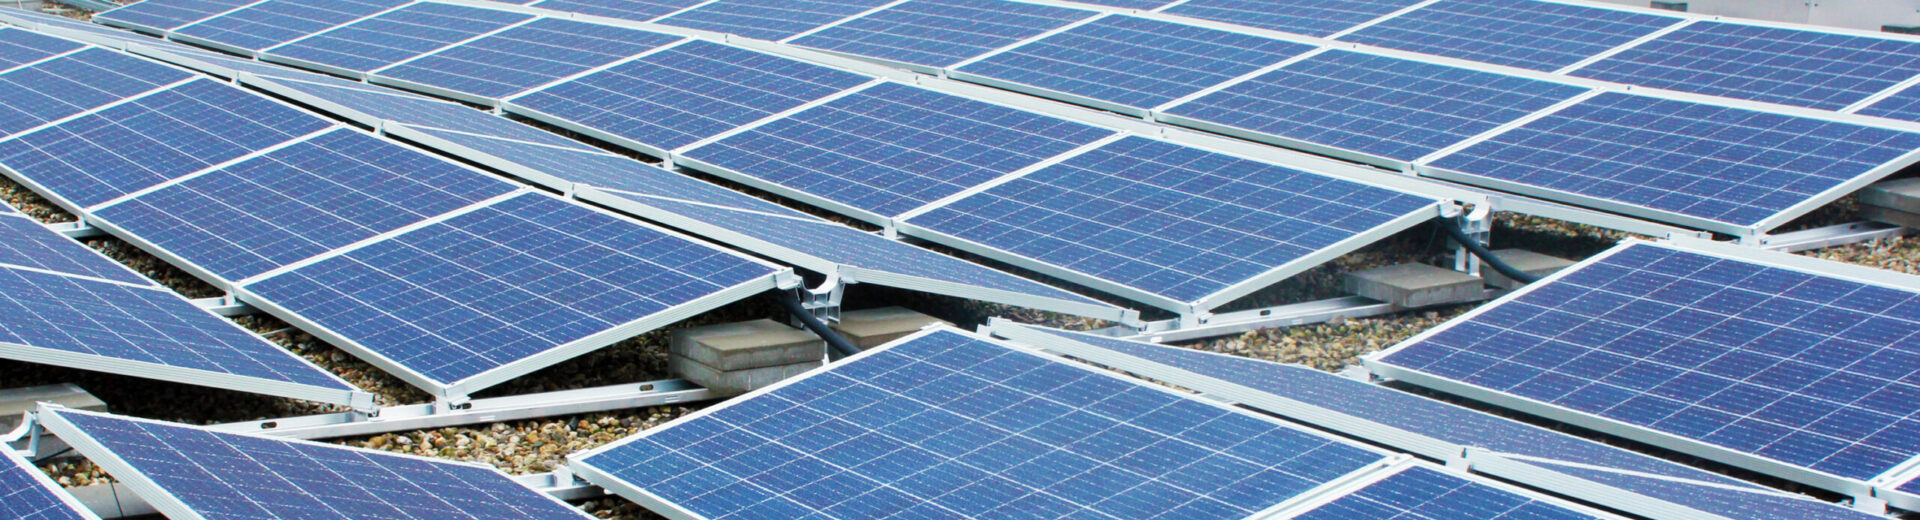 Solarmodule auf einem Flachdach